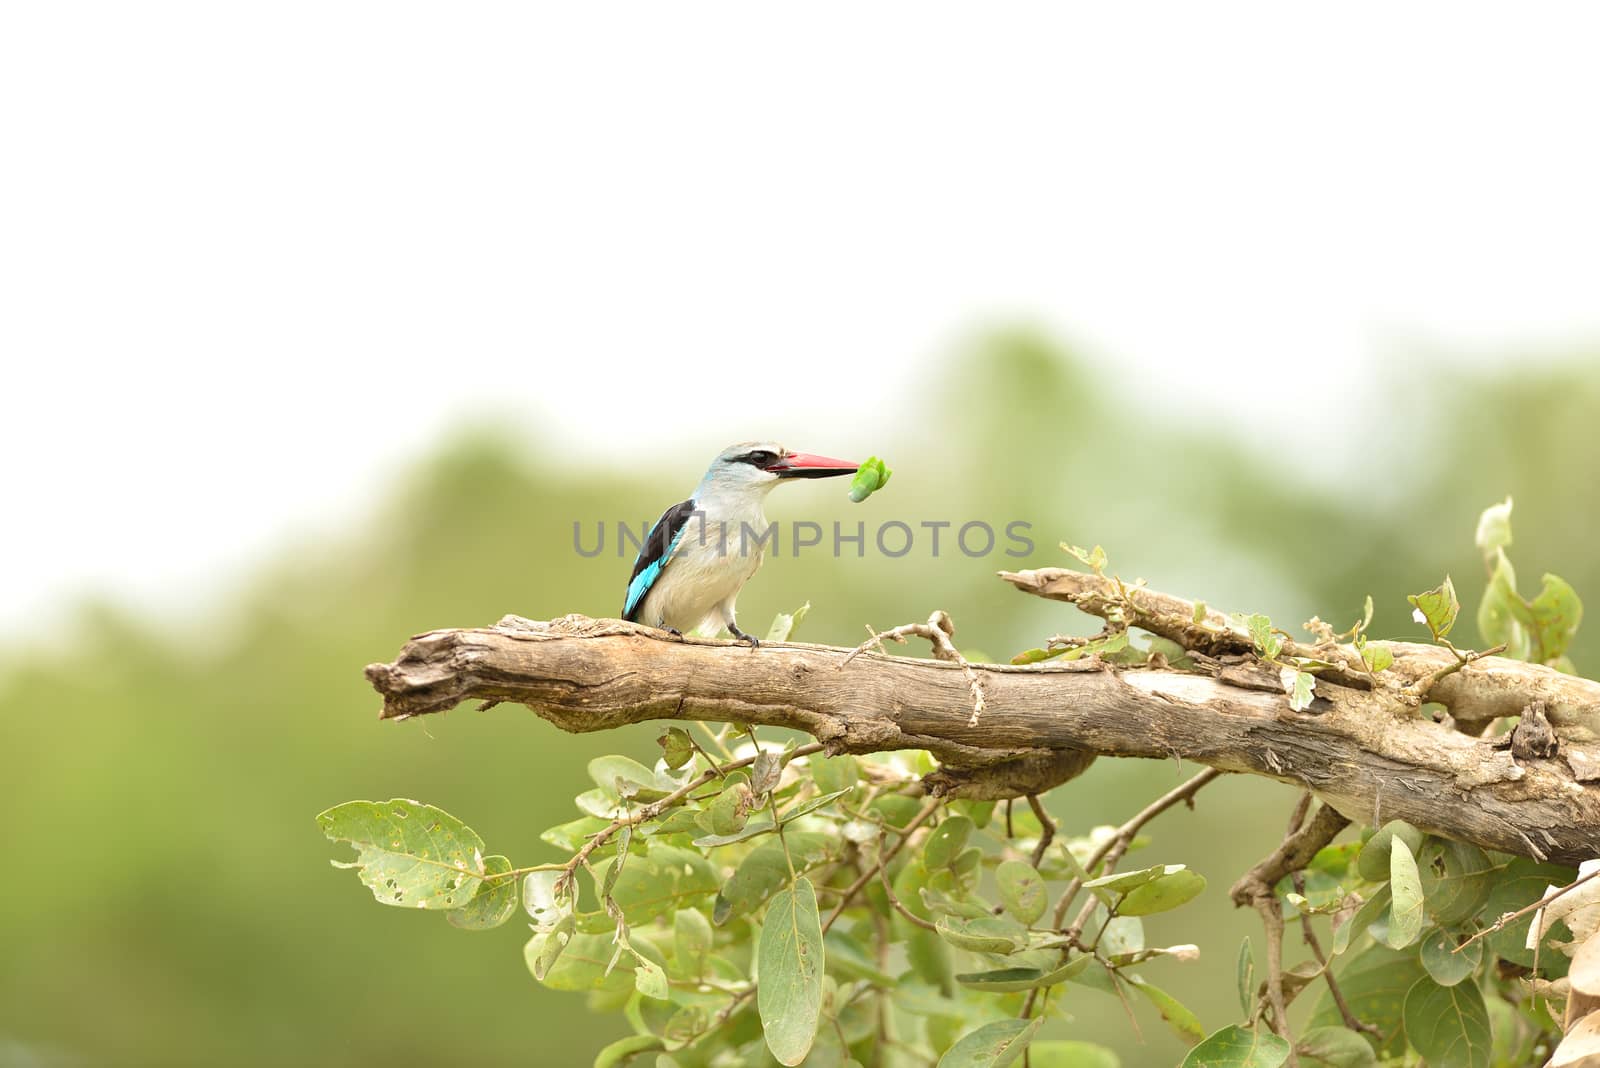 Forest kingfisher in the wilderness by ozkanzozmen